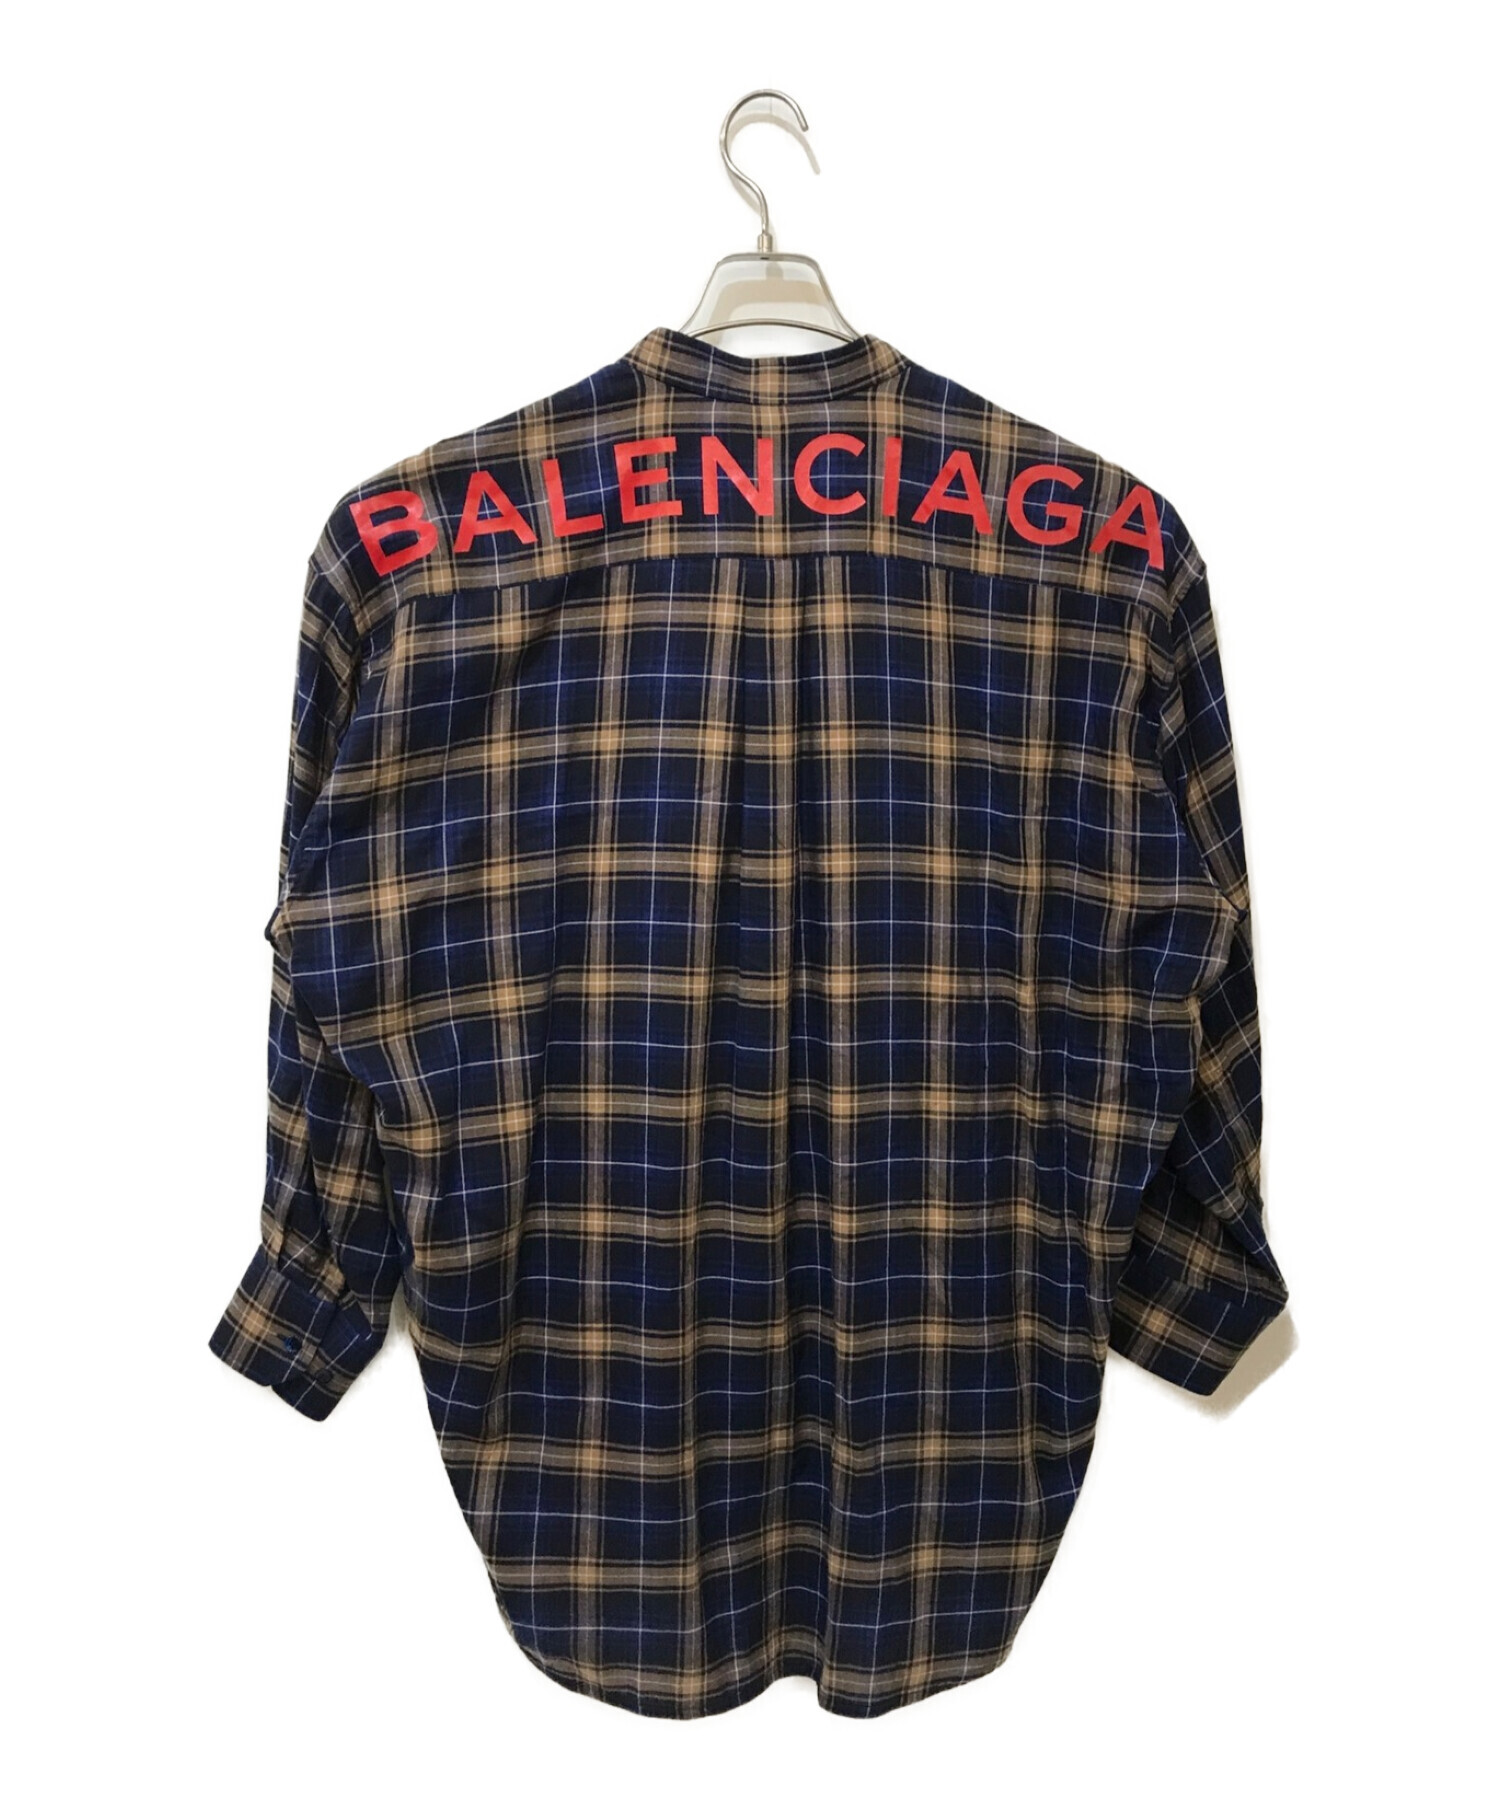 BALENCIAGA (バレンシアガ) チェックシャツ ネイビー サイズ:34